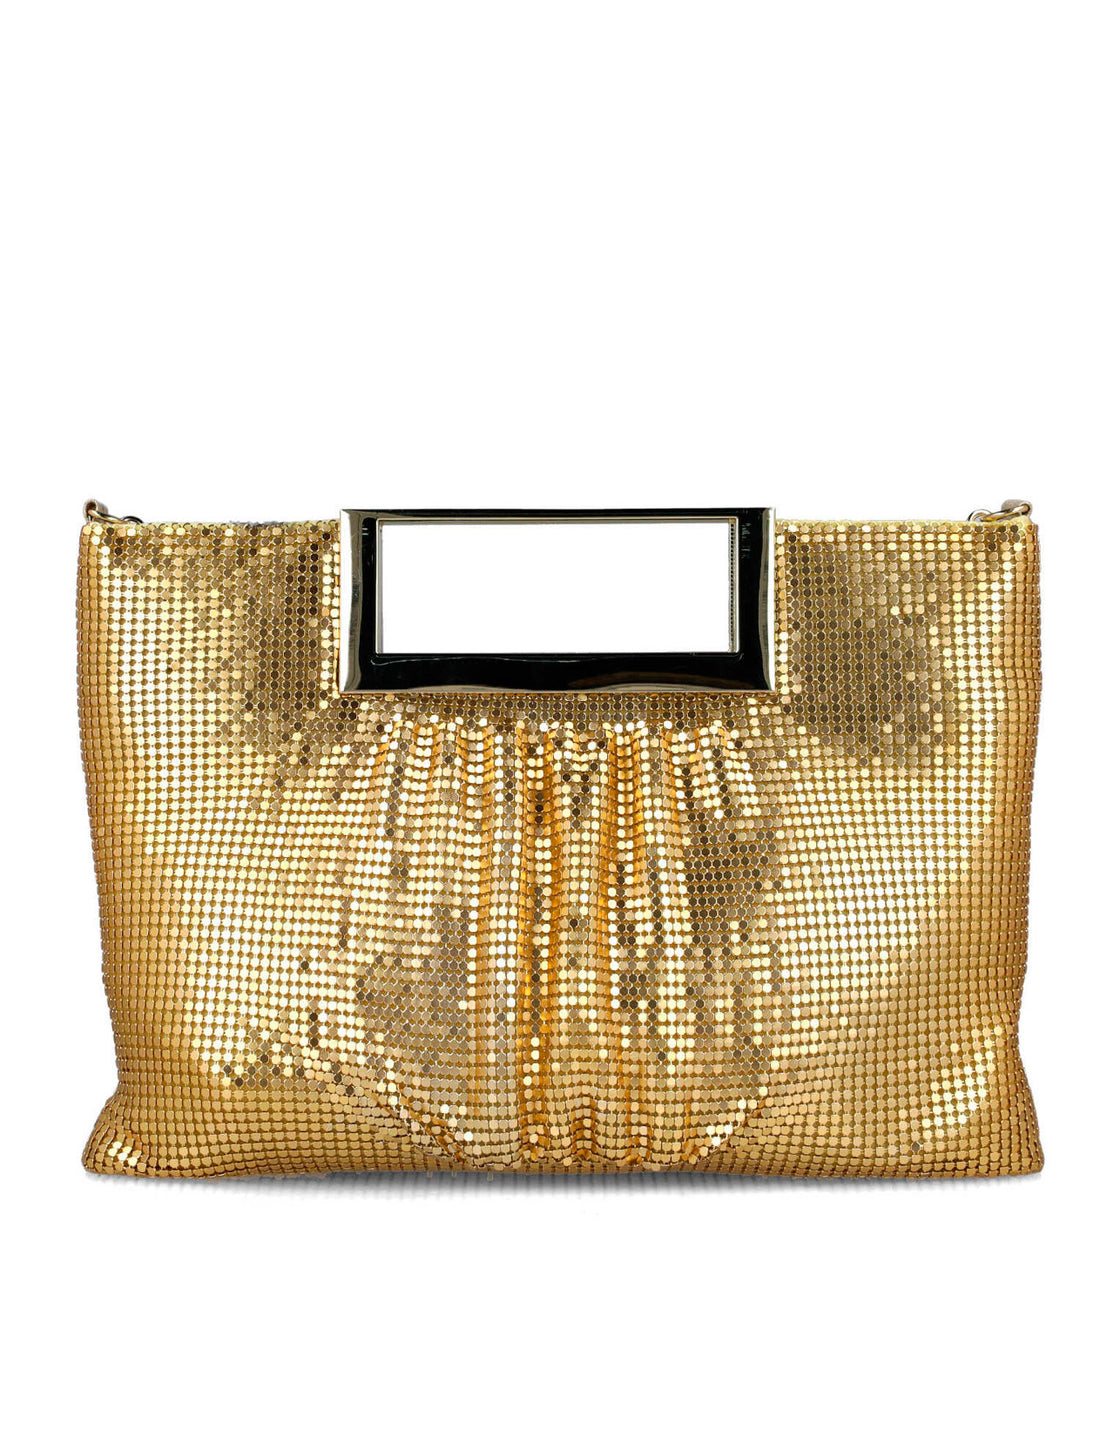 Gold Puffy Handbag With Metallic Handle_85560_00_01